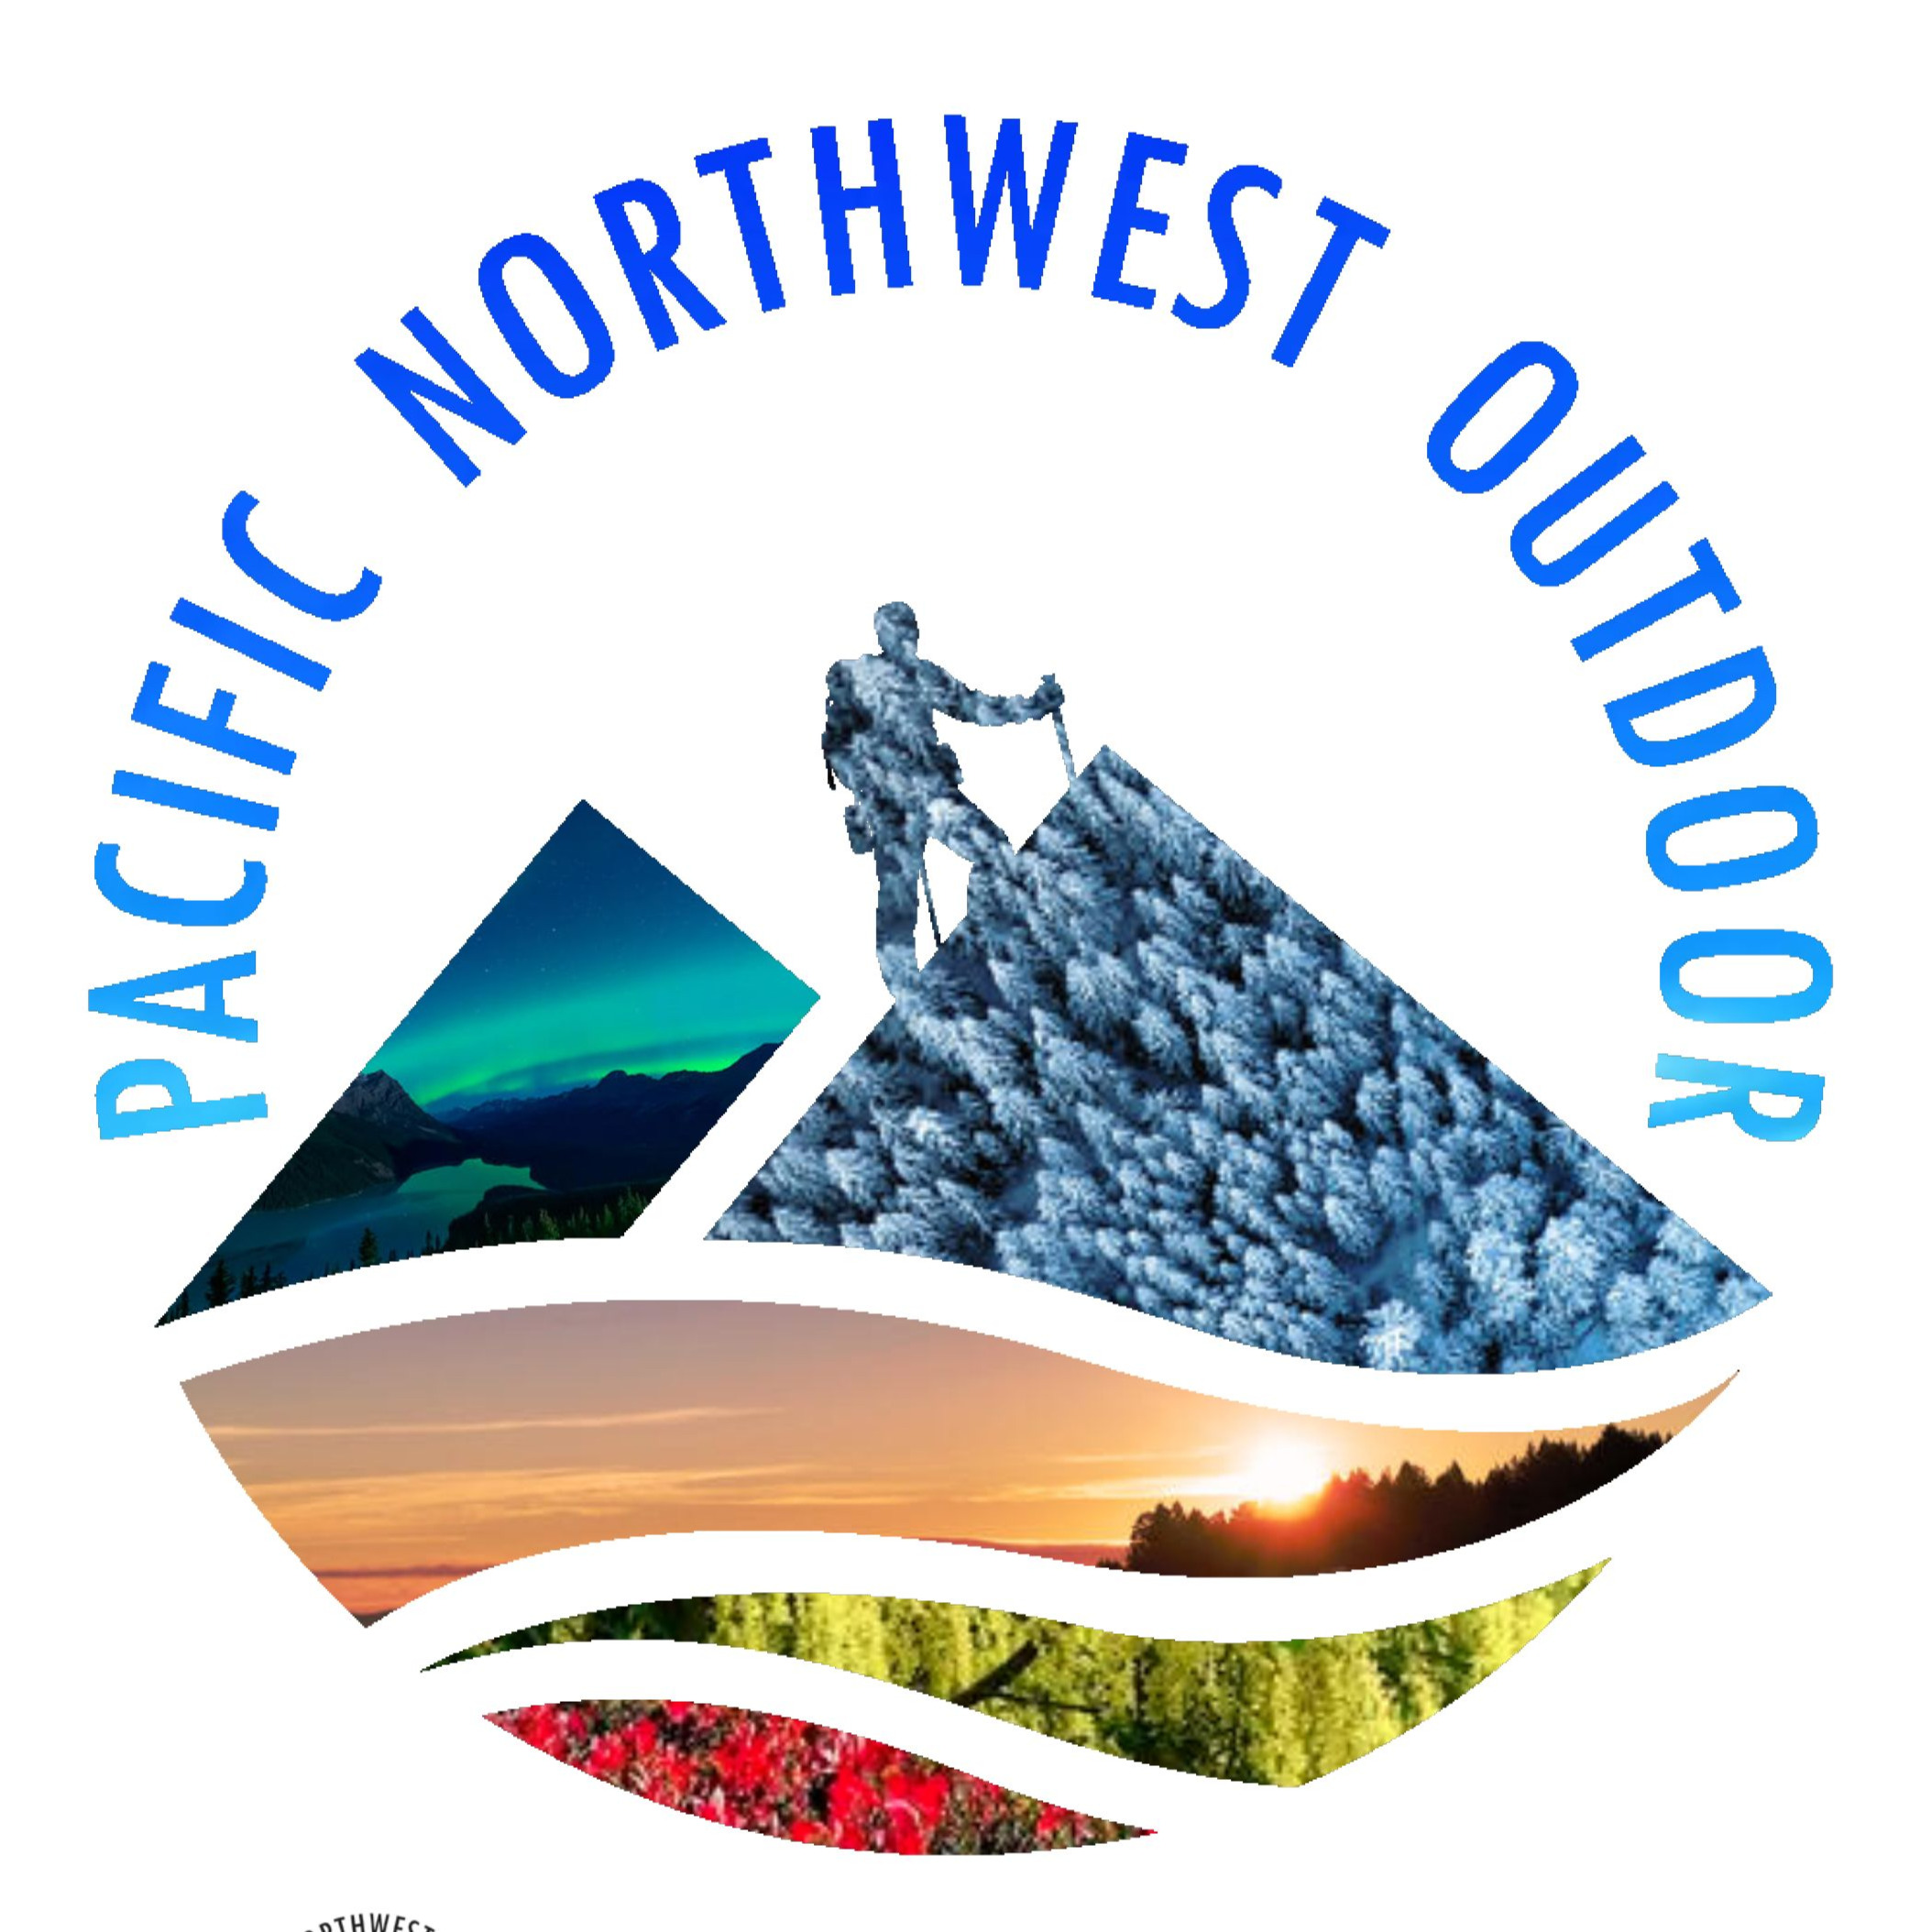 Pacific Northwest Outdoor Association